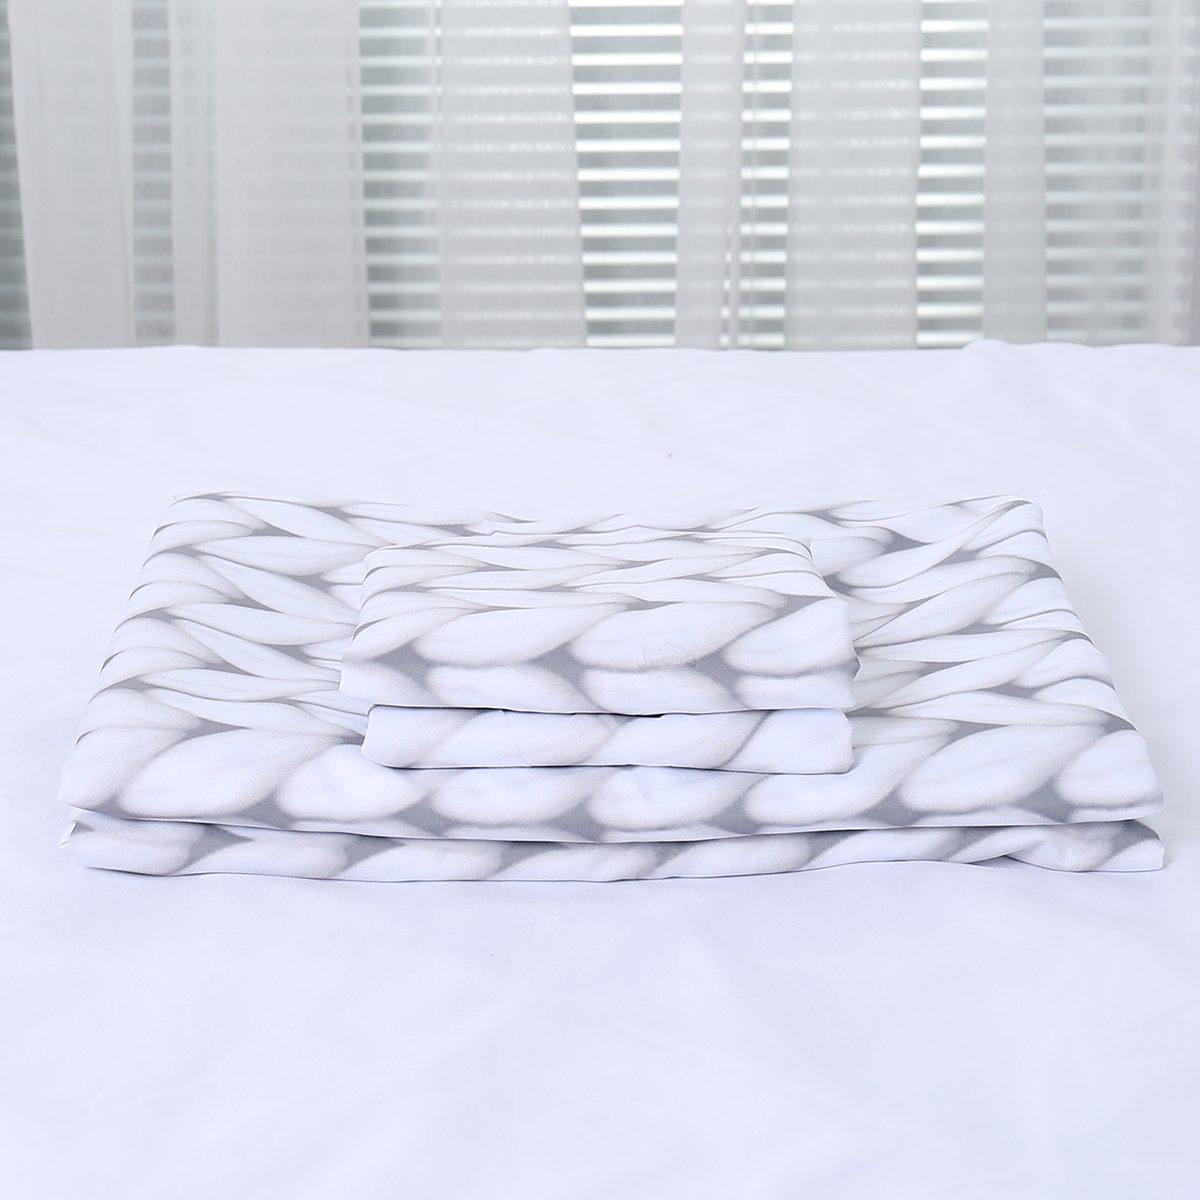 WONGS BEDDING Weave pattern Bedding Bedroom Home Kit - Wongs bedding